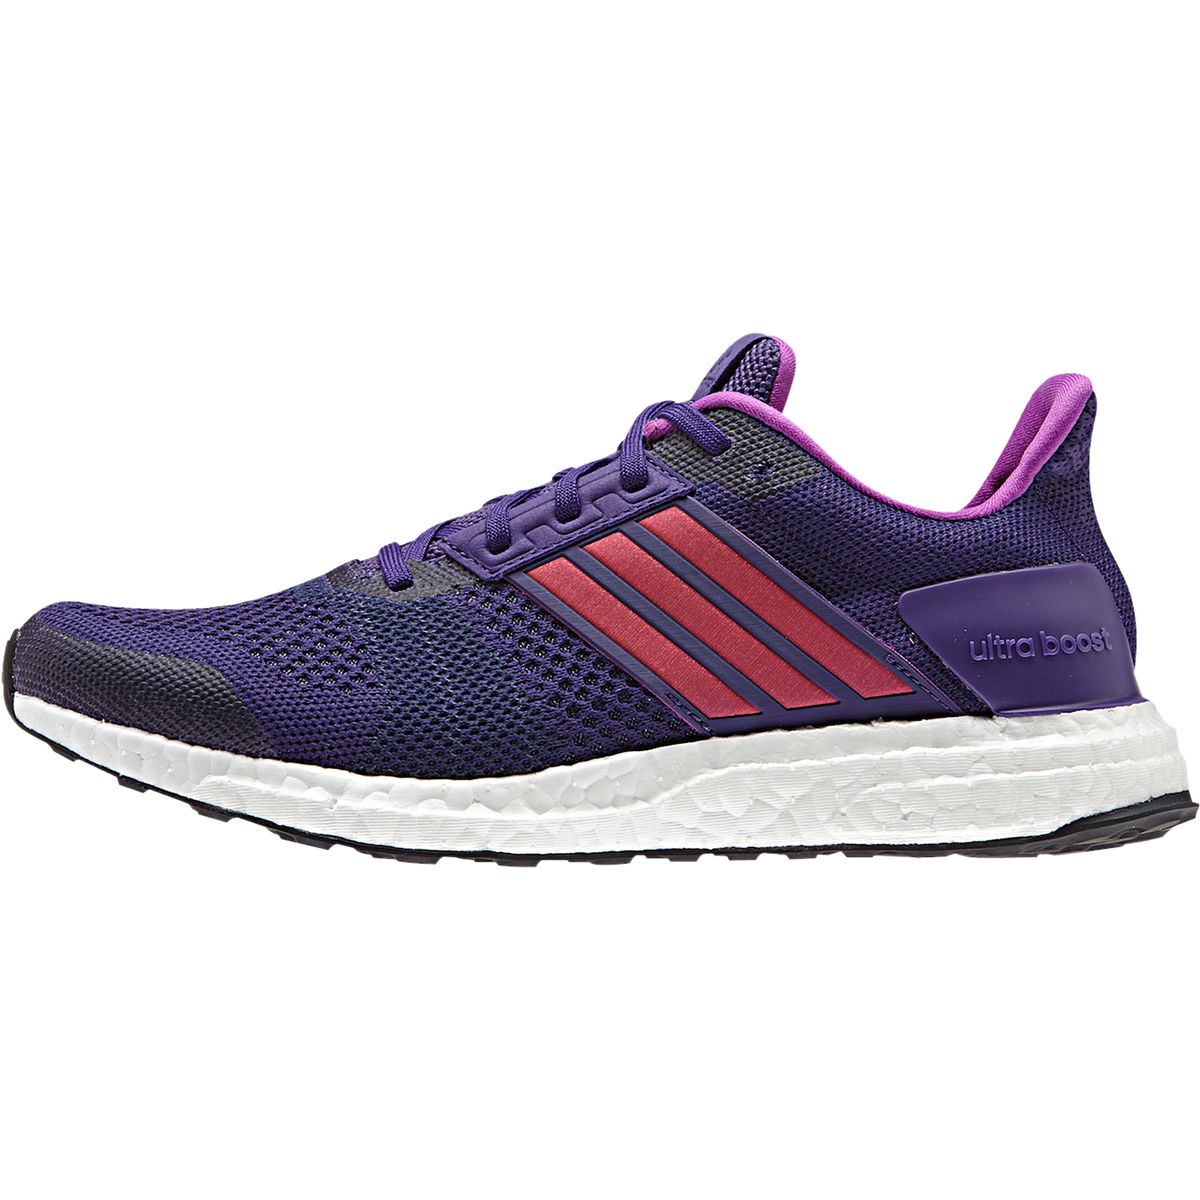 Adidas Ultra Boost ST Running Shoe - Women's | eBay